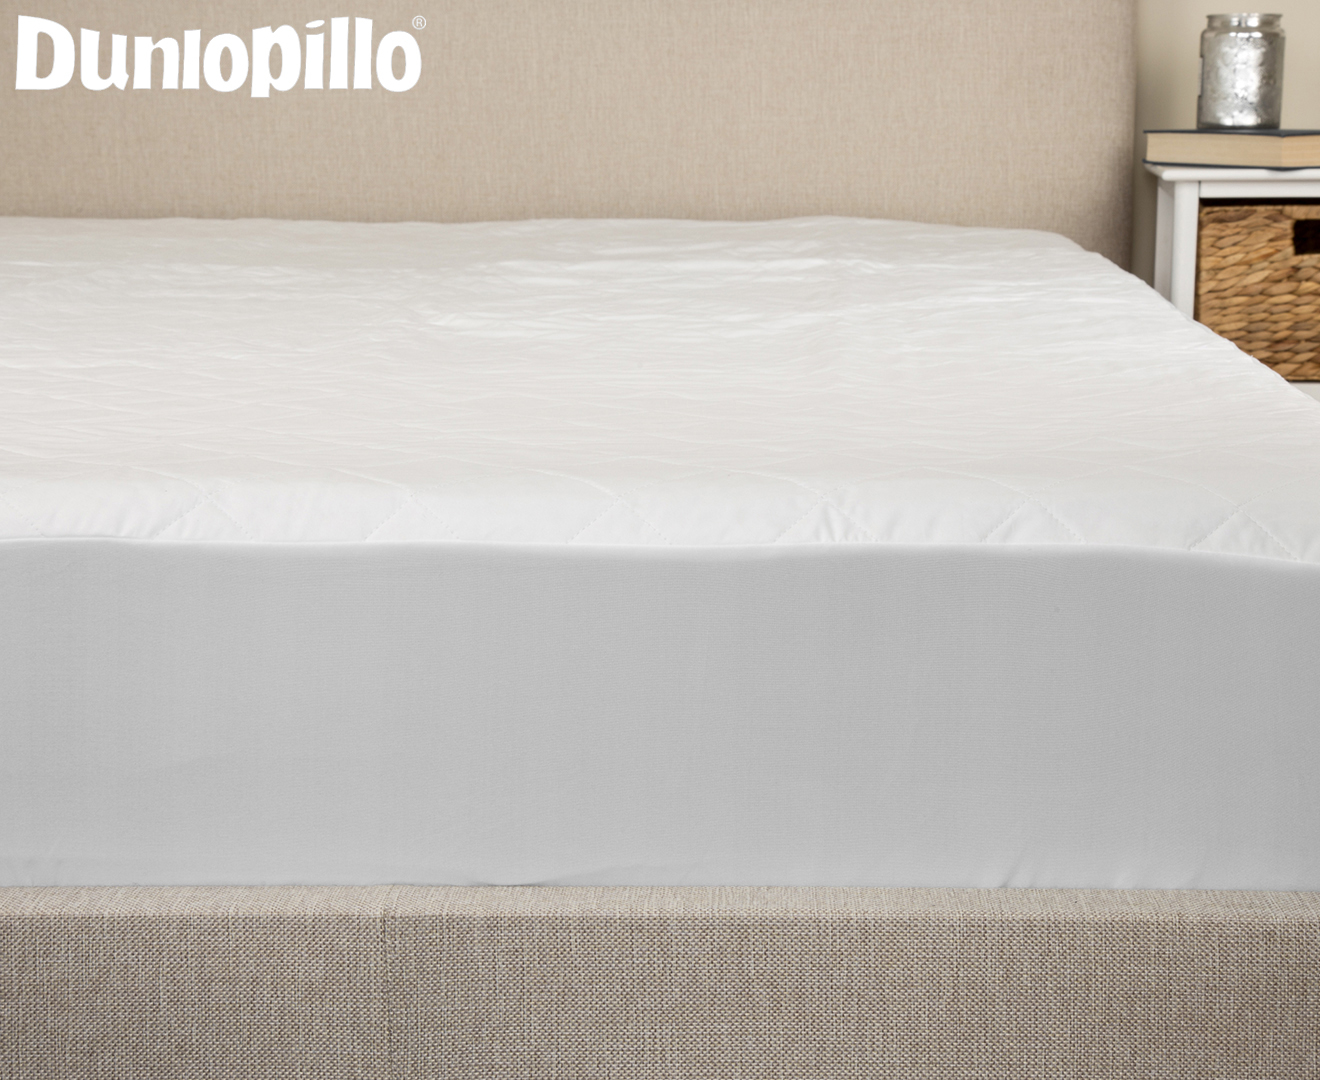 dunlopillo mattress protector king size